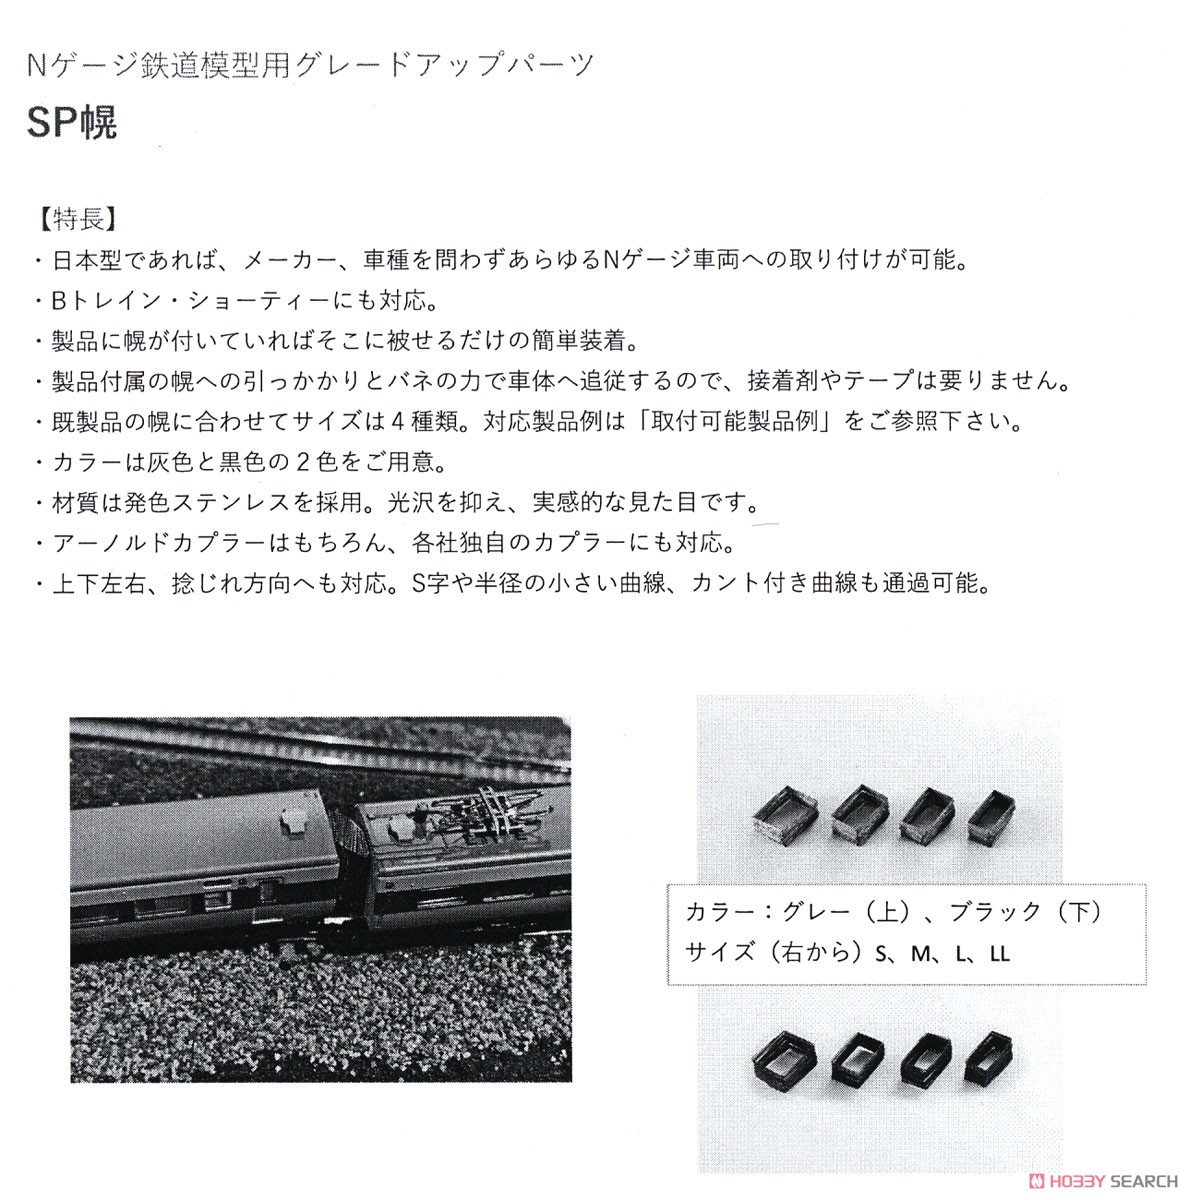 SP幌 Sサイズ (6.3×14.1mm) (カラー/ブラウン) (6個入) (鉄道模型) 設計図2